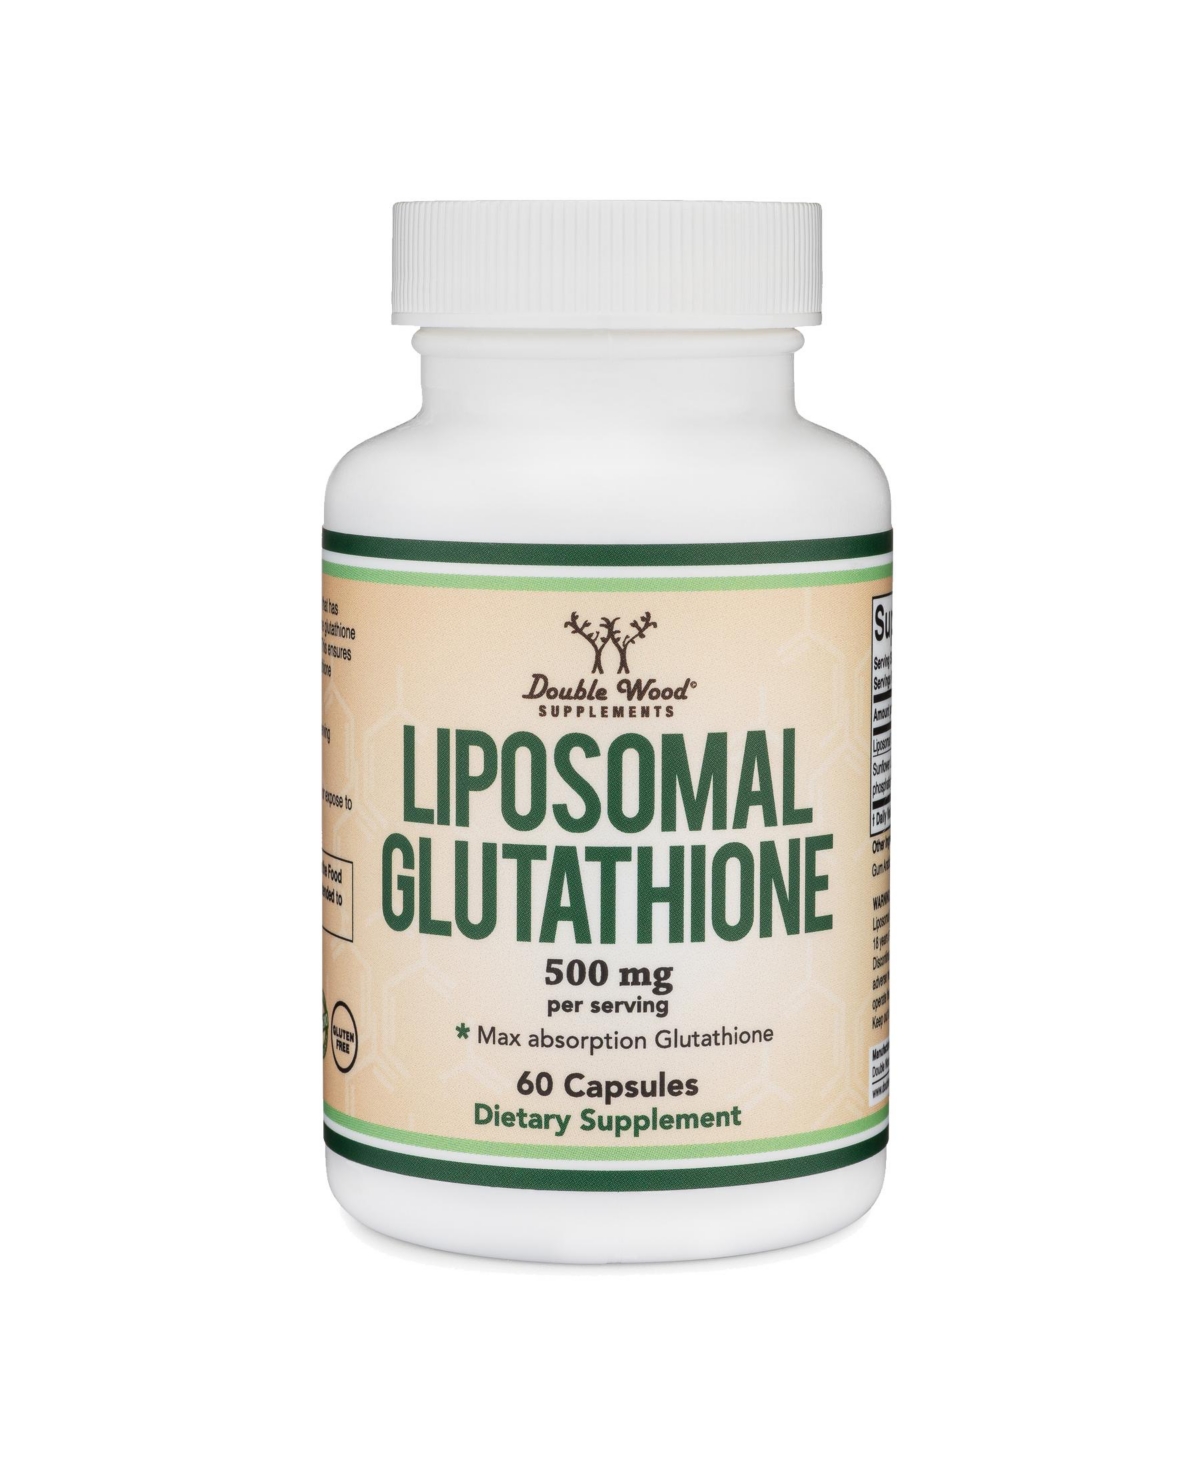 Liposomal Glutathione - 60 capsules, 500 mg servings